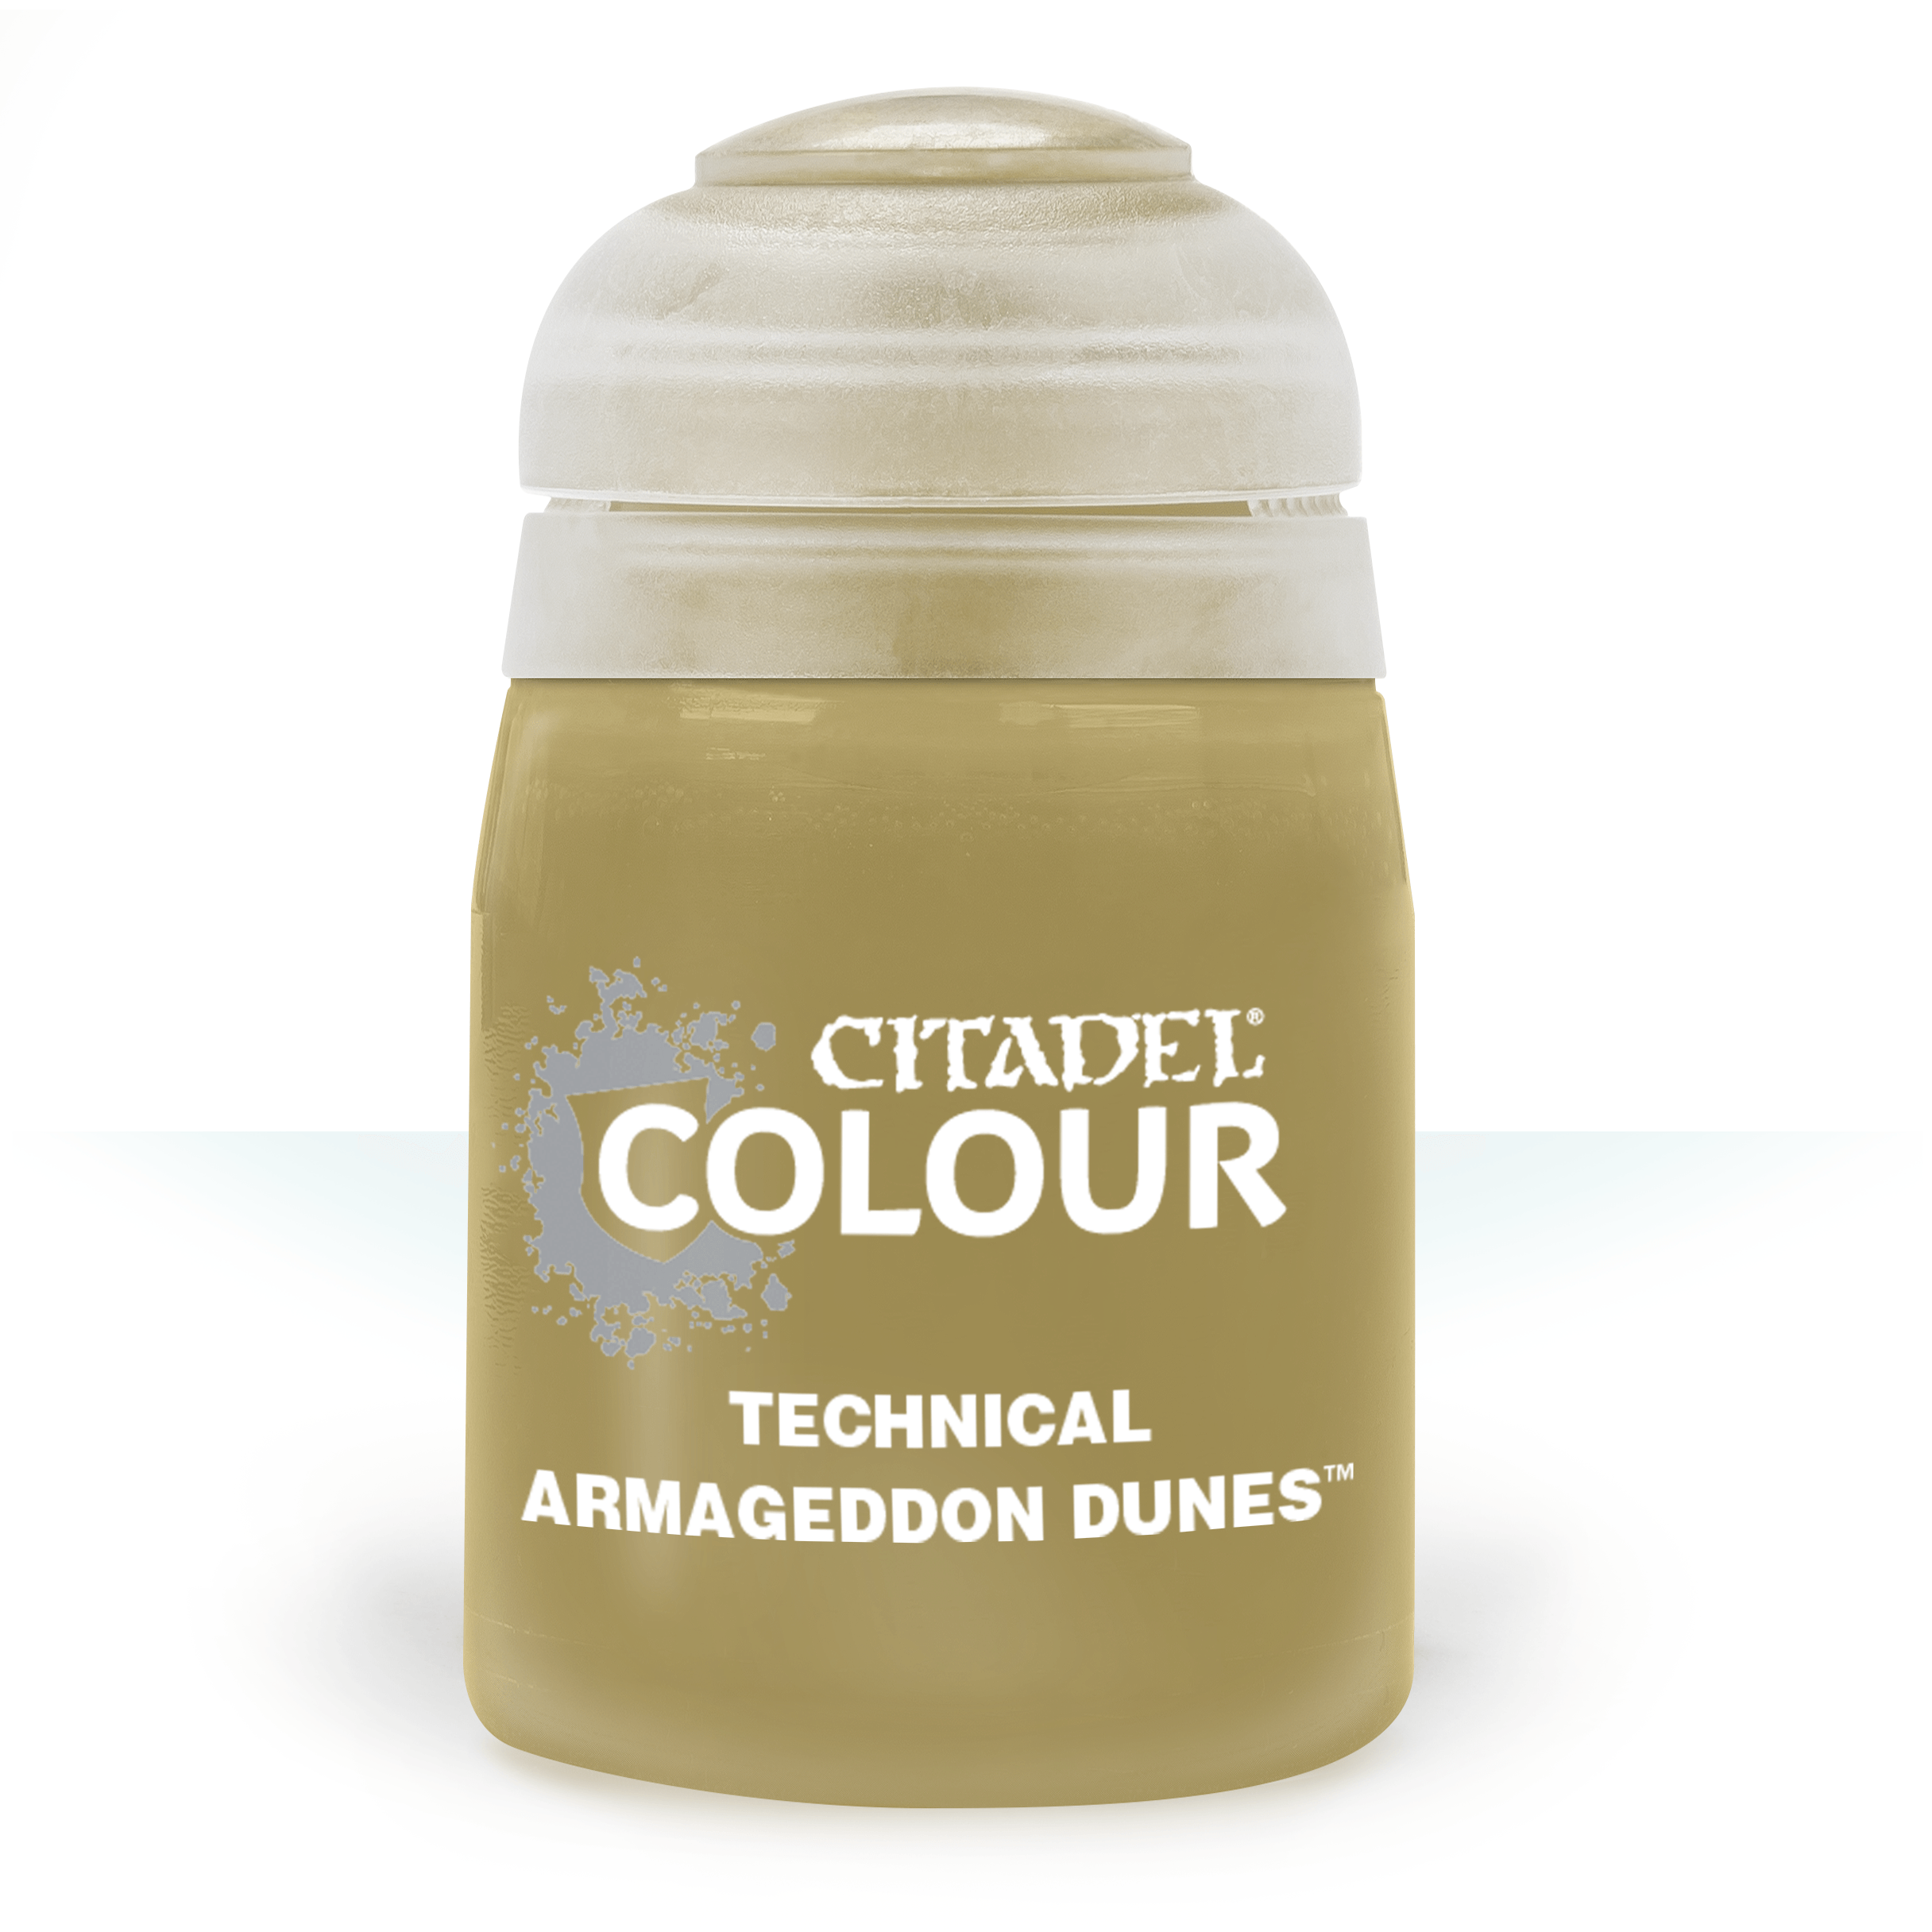 Technical Armageddon Dunes - Citadel Colour